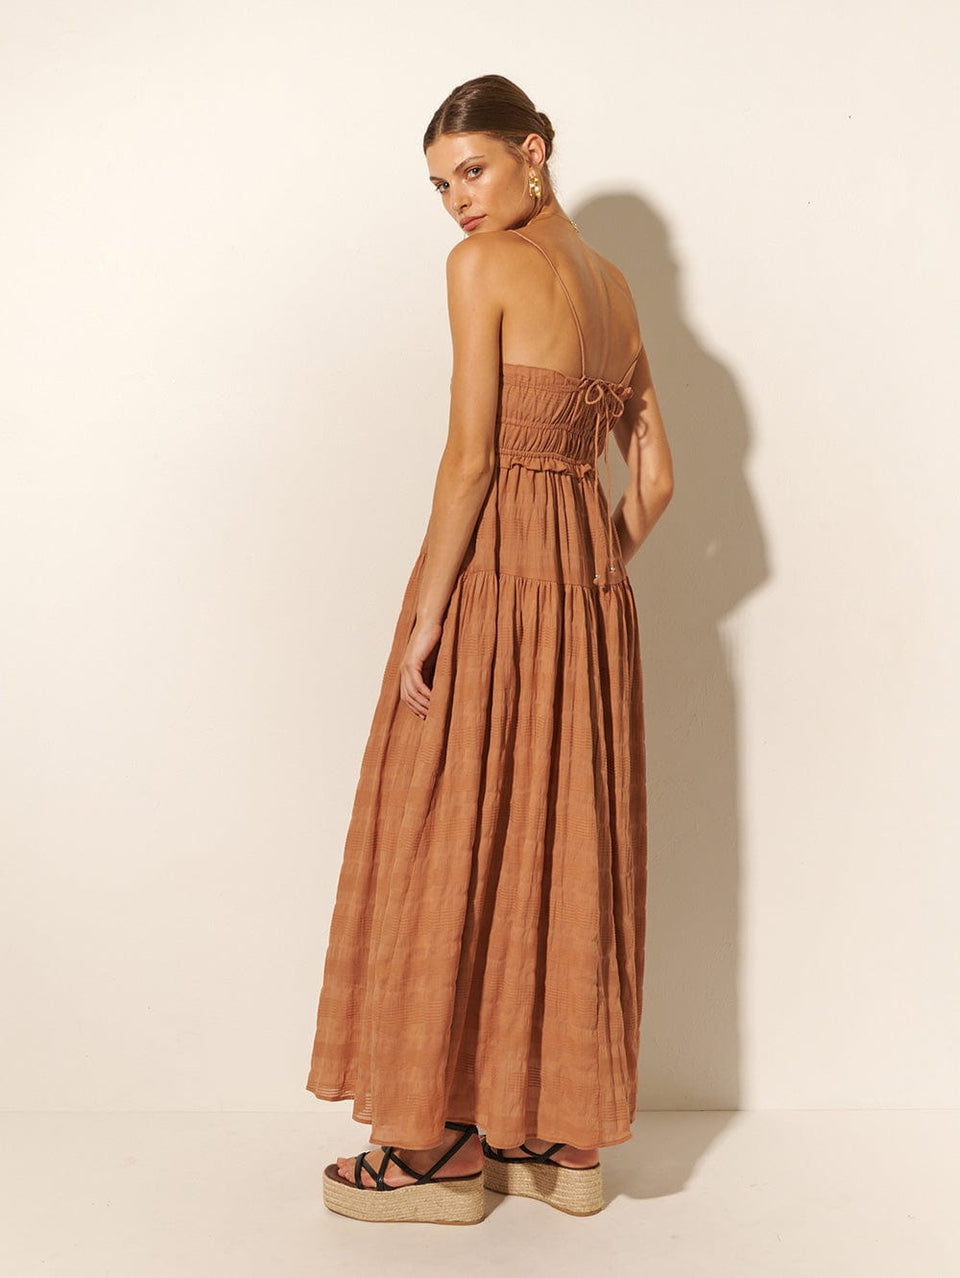 KIVARI Rylan Maxi Dress | Model wears Brown Maxi Dress Back View